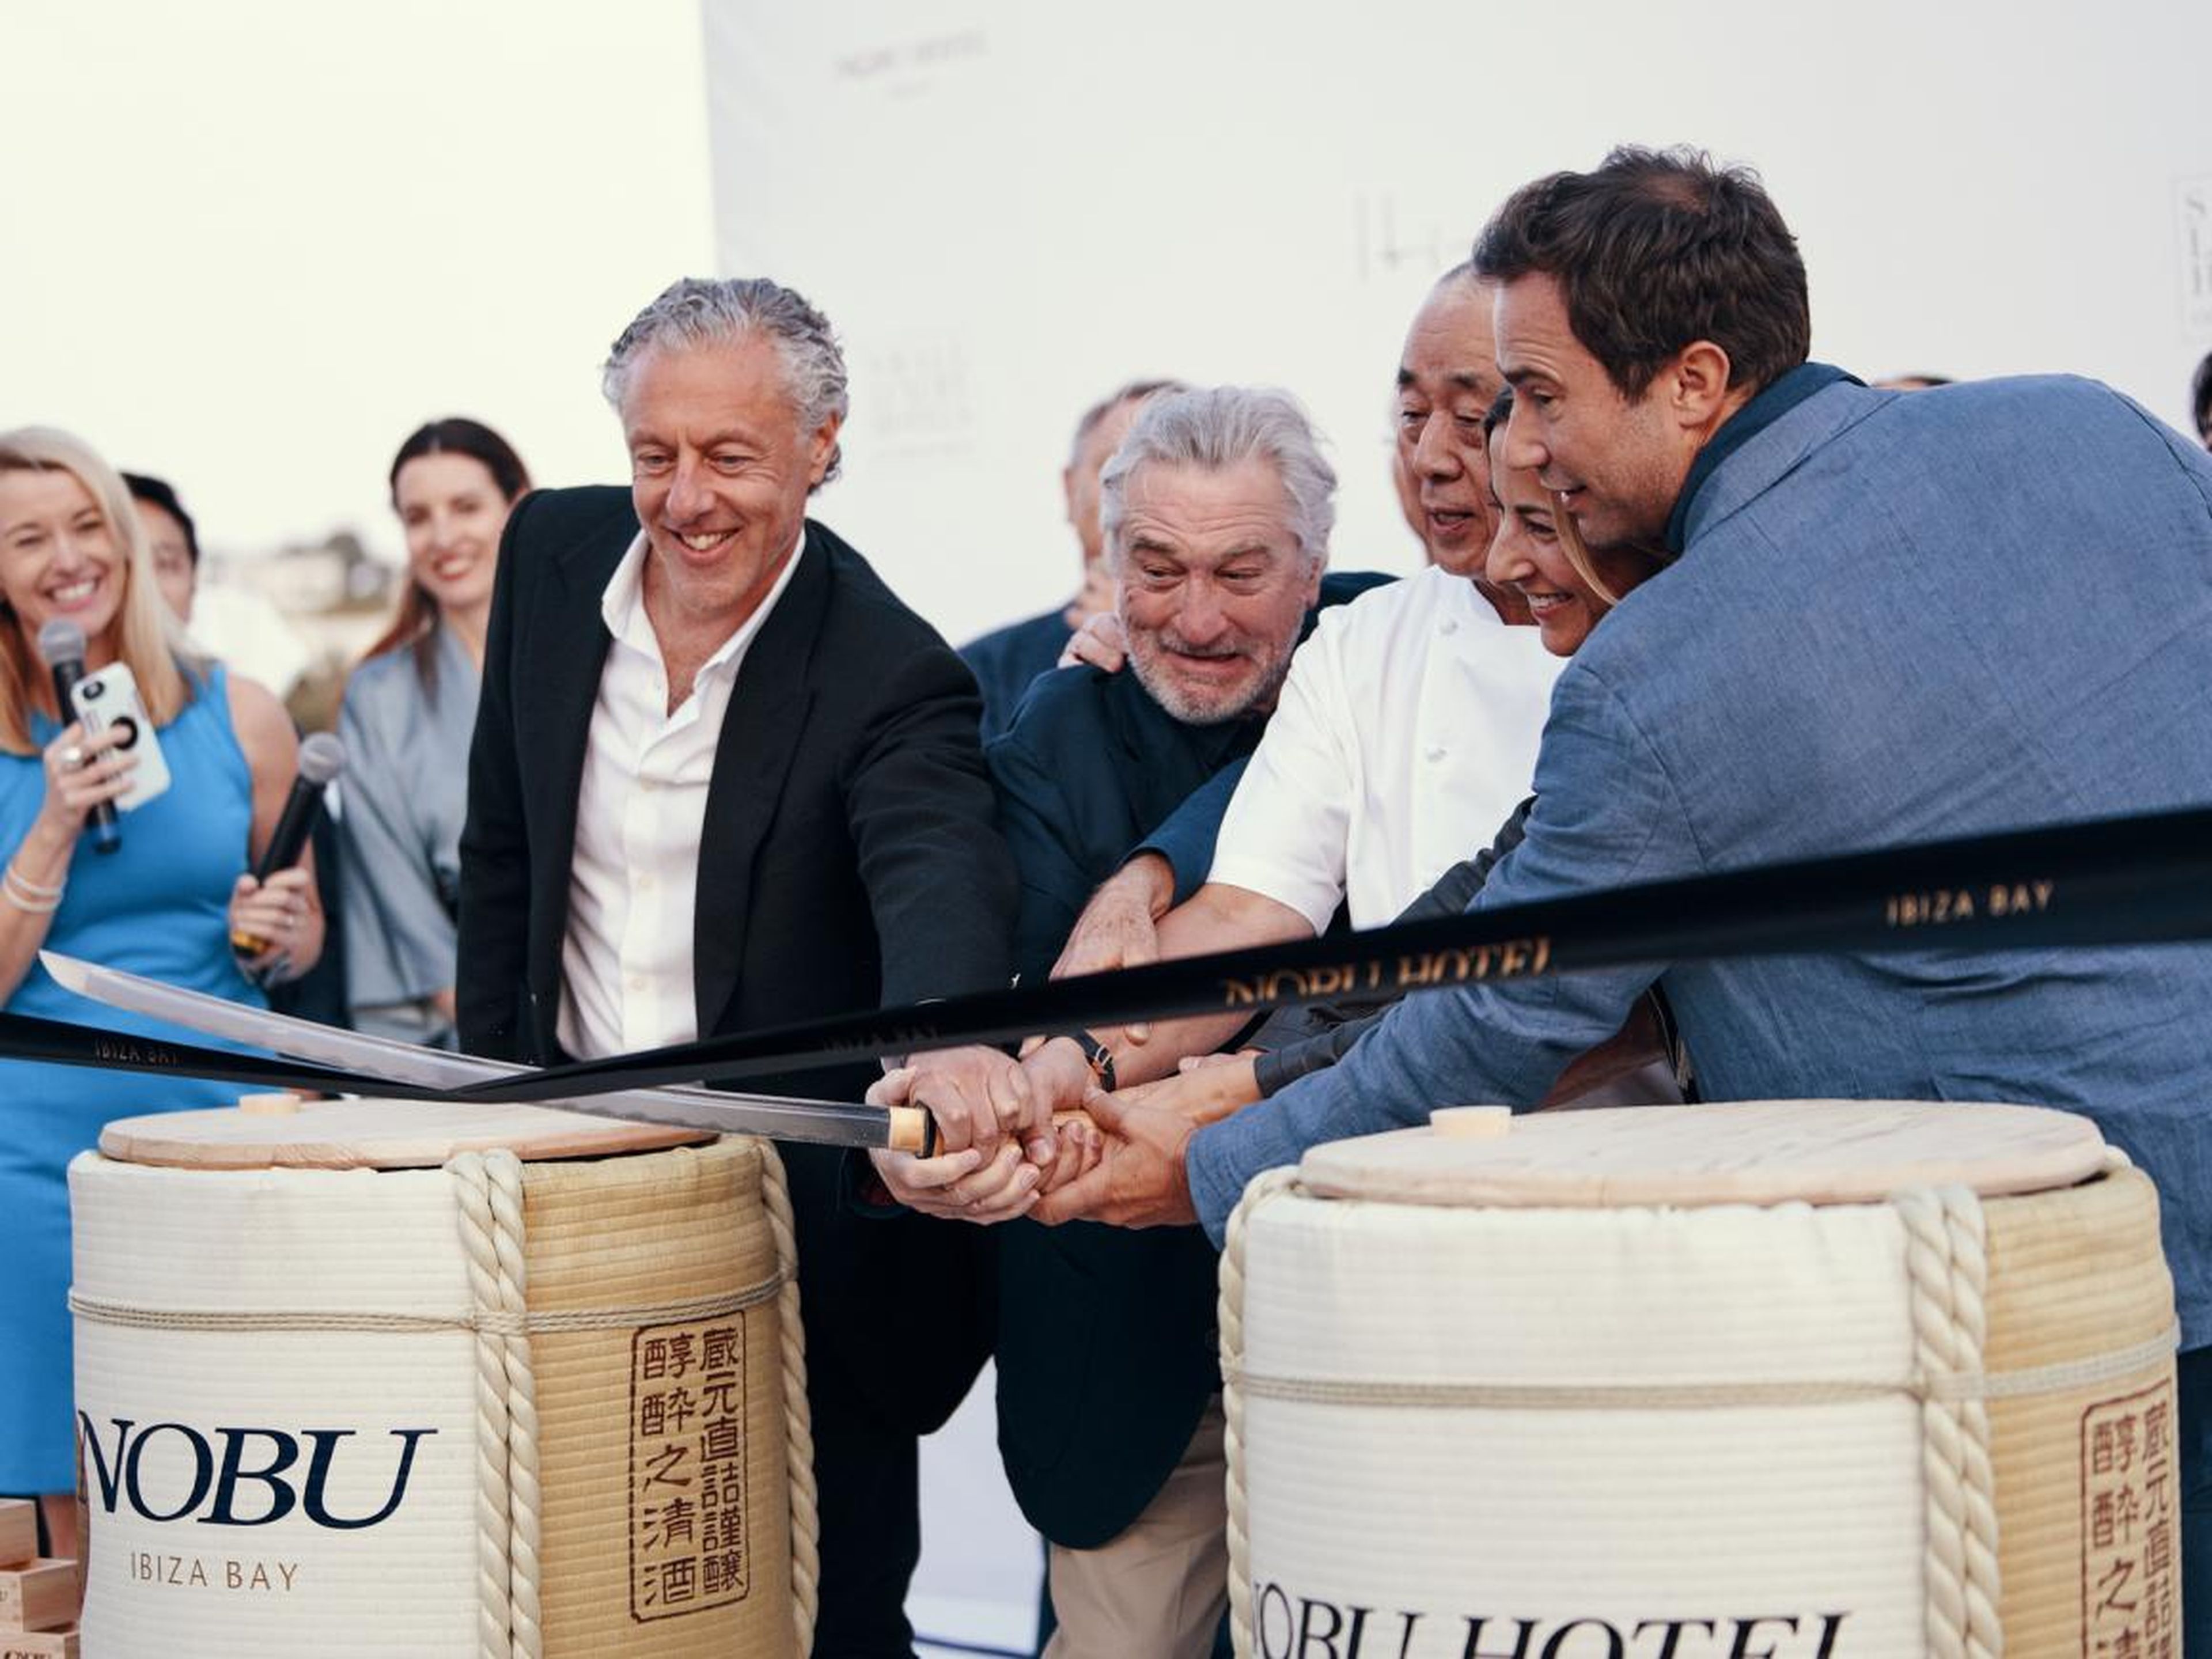 Actor Robert De Niro, Hollywood producer Meir Teper, and celebrity chef Nobuyuki Matsuhisa, co-founders of Nobu Hospitality, inaugurate the new Nobu Hotel Ibiza Bay this past May.